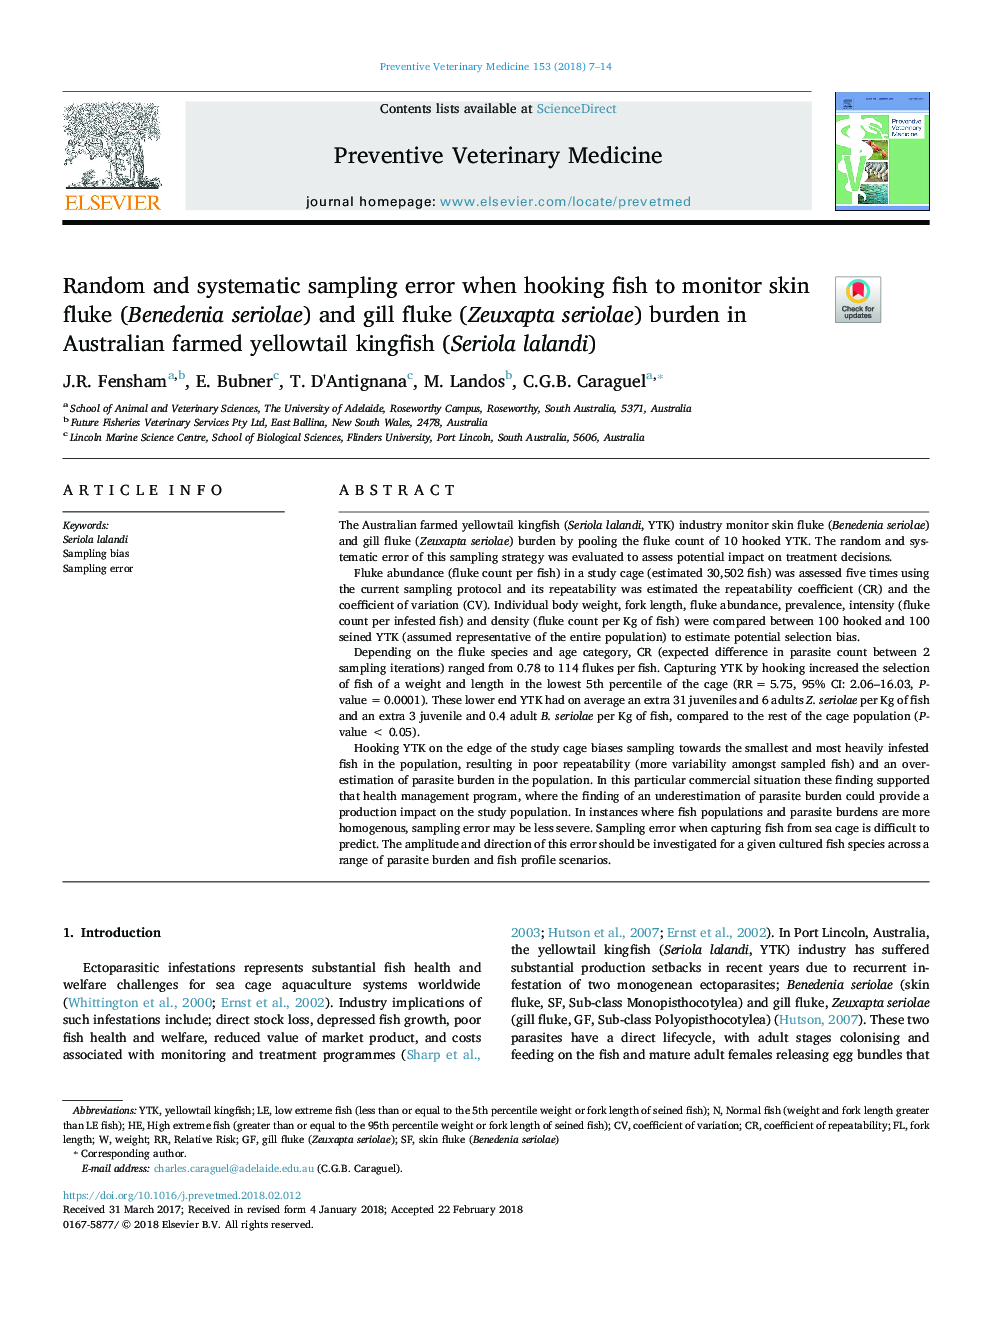 Random and systematic sampling error when hooking fish to monitor skin fluke (Benedenia seriolae) and gill fluke (Zeuxapta seriolae) burden in Australian farmed yellowtail kingfish (Seriola lalandi)